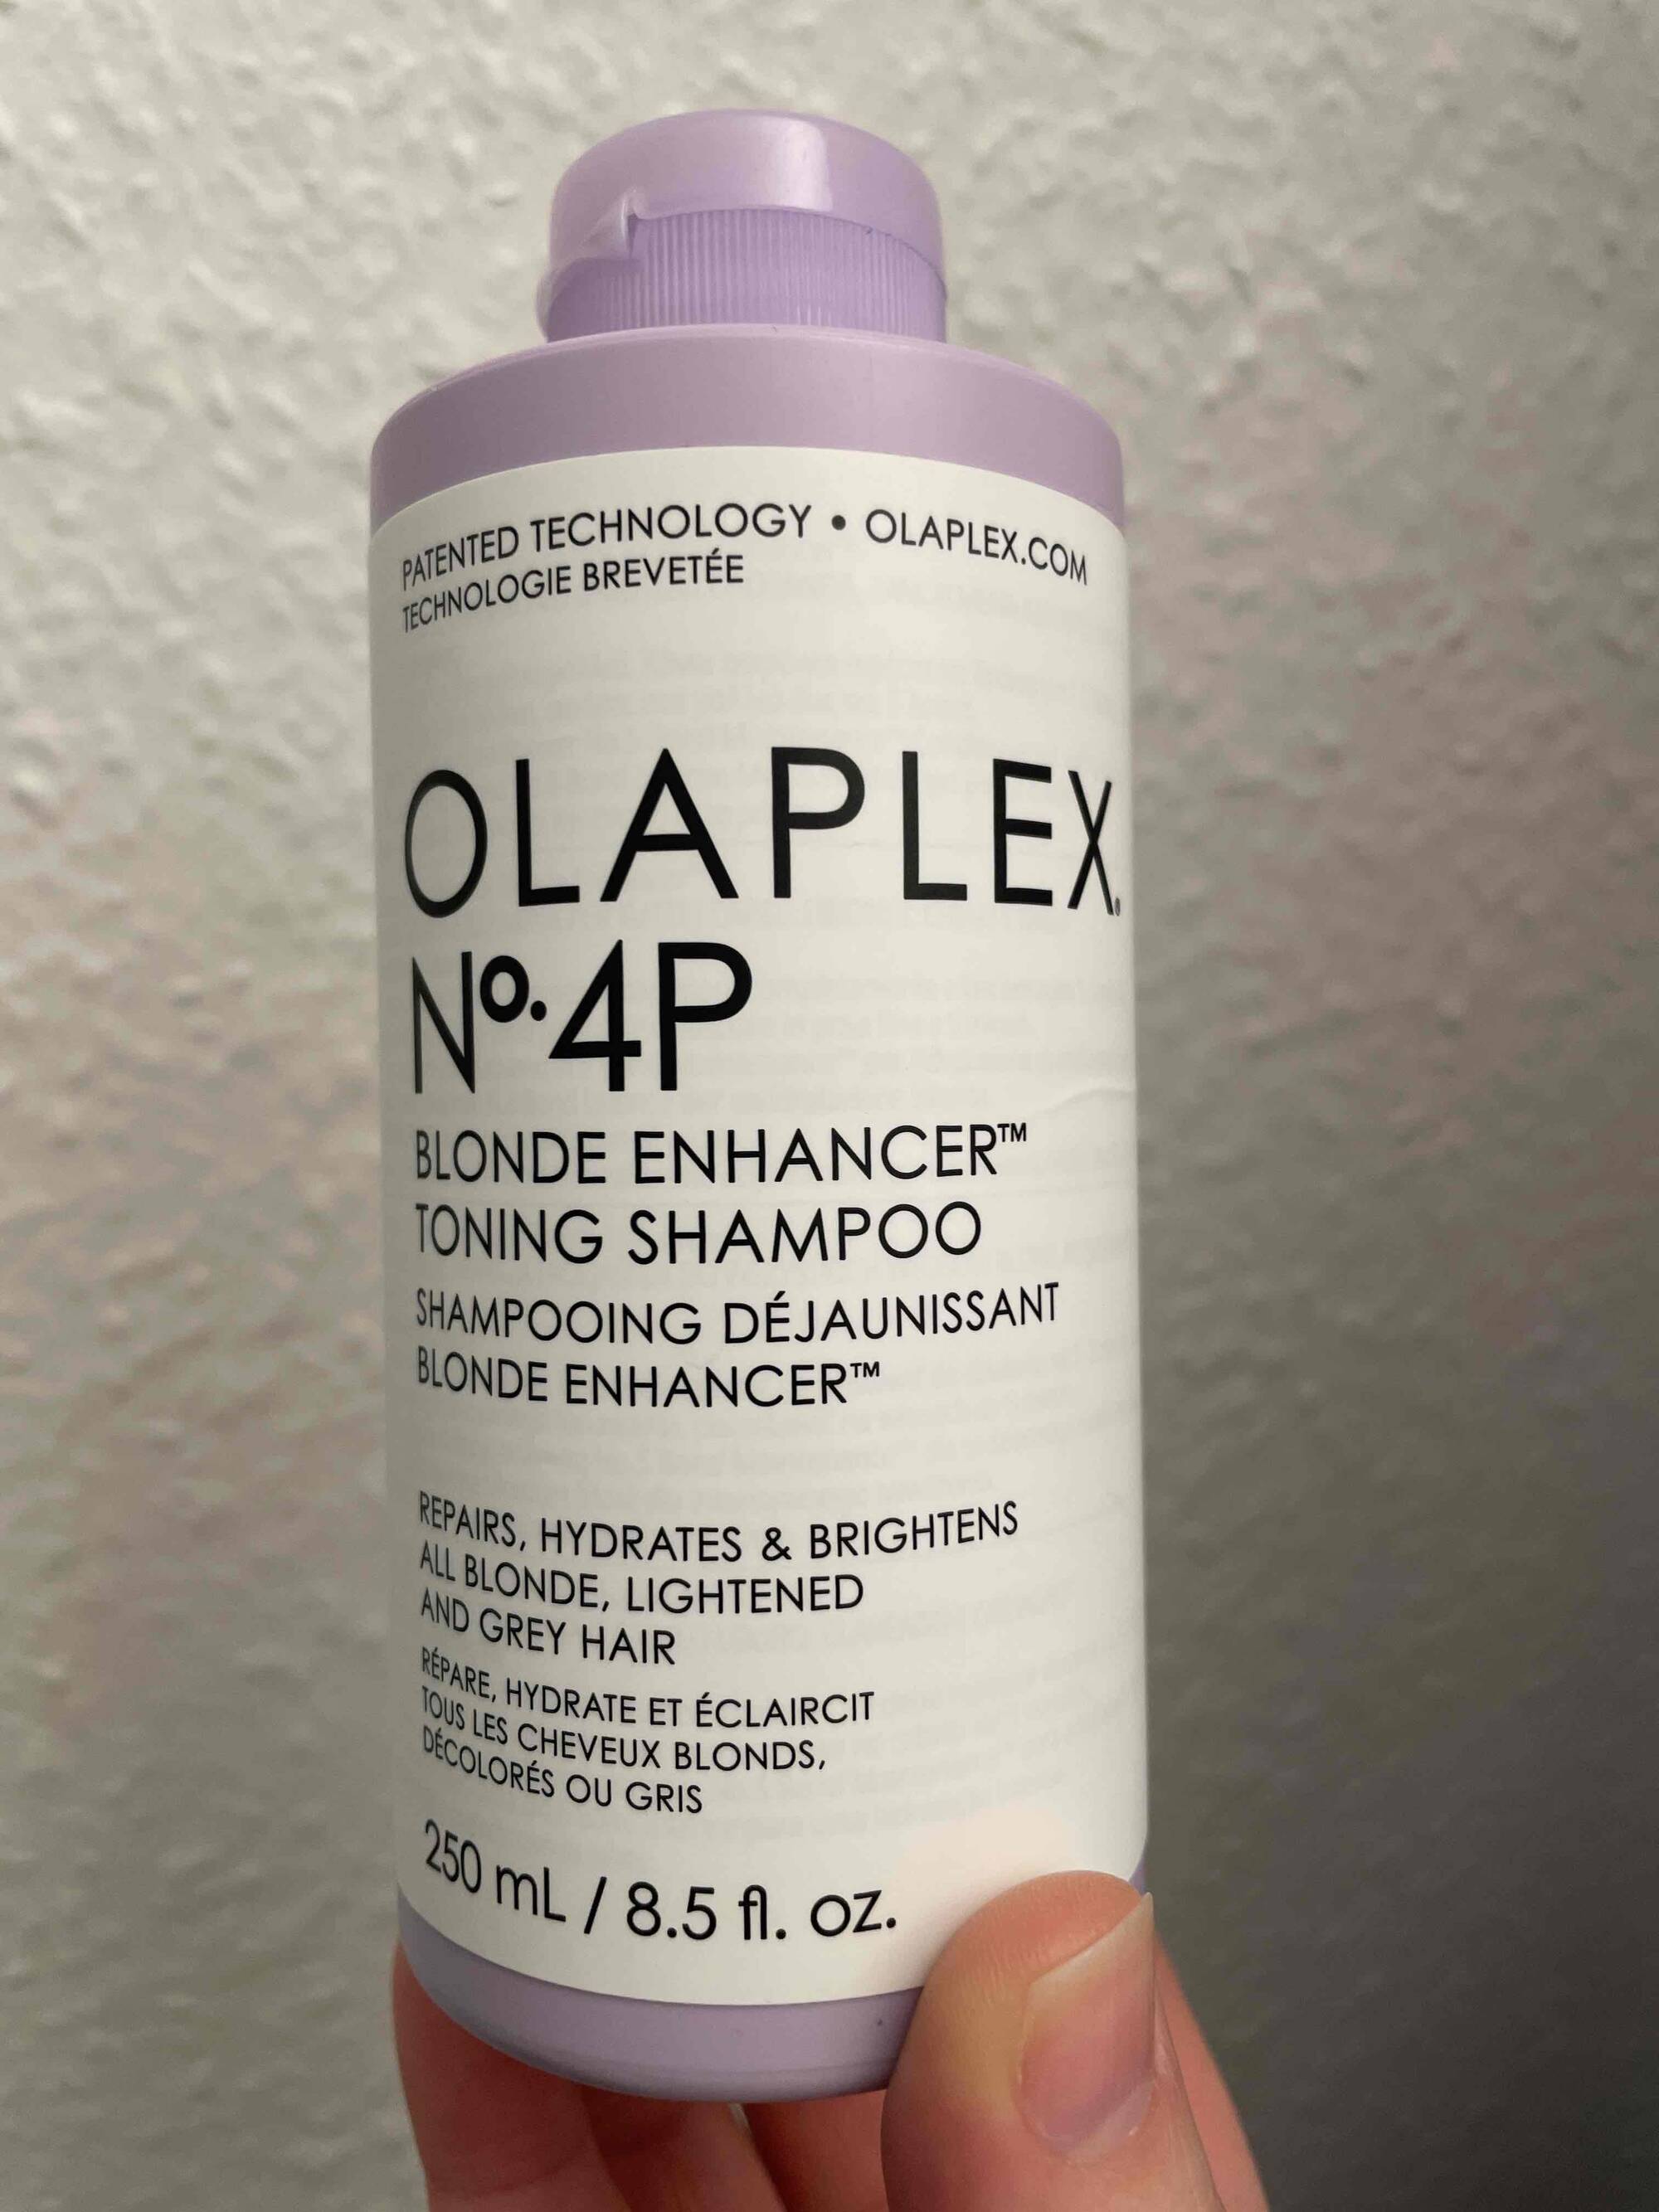 OLAPLEX - Shampooing déjaunissant blonde enhancer n°4P